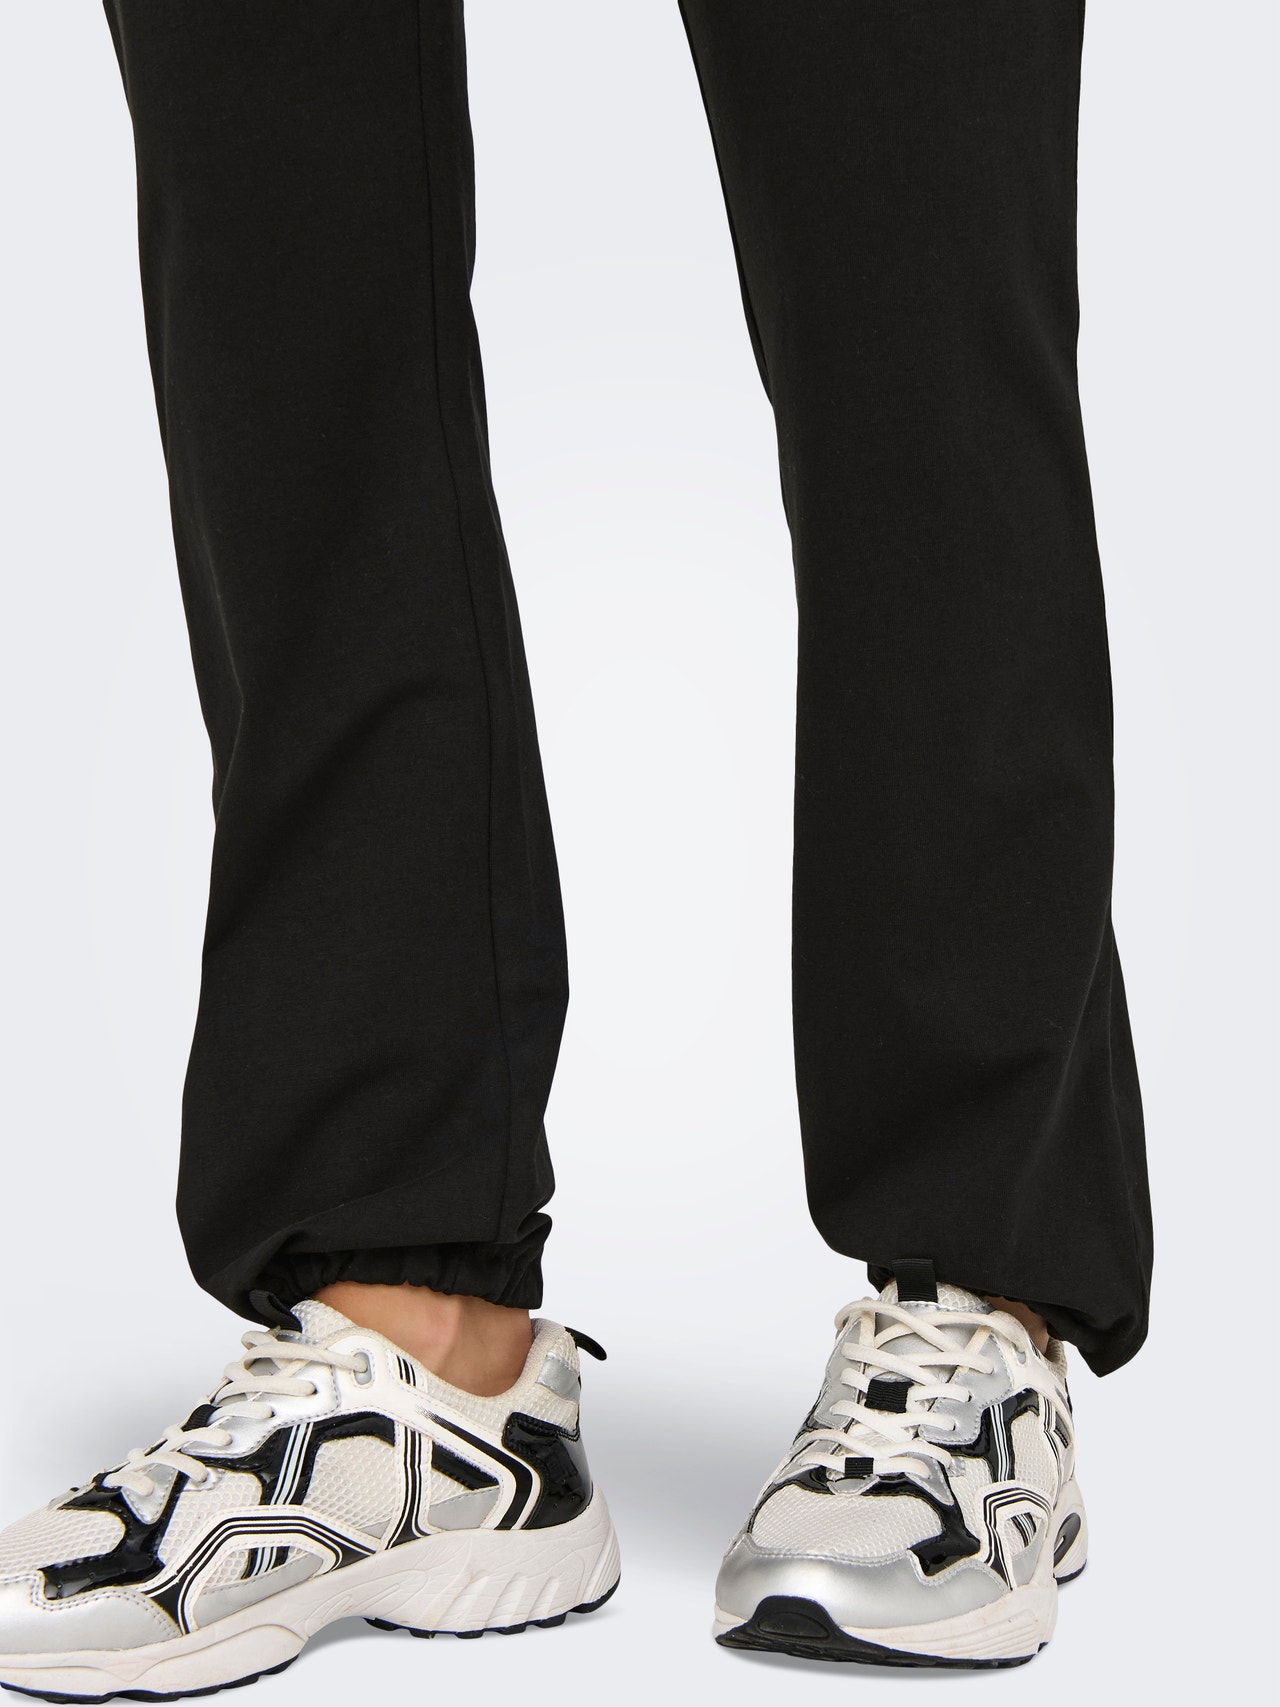 ONLY Pantalons Flared Fit Taille moyenne Jambe évasée Poignets avec bande élastique -Black - 15062199